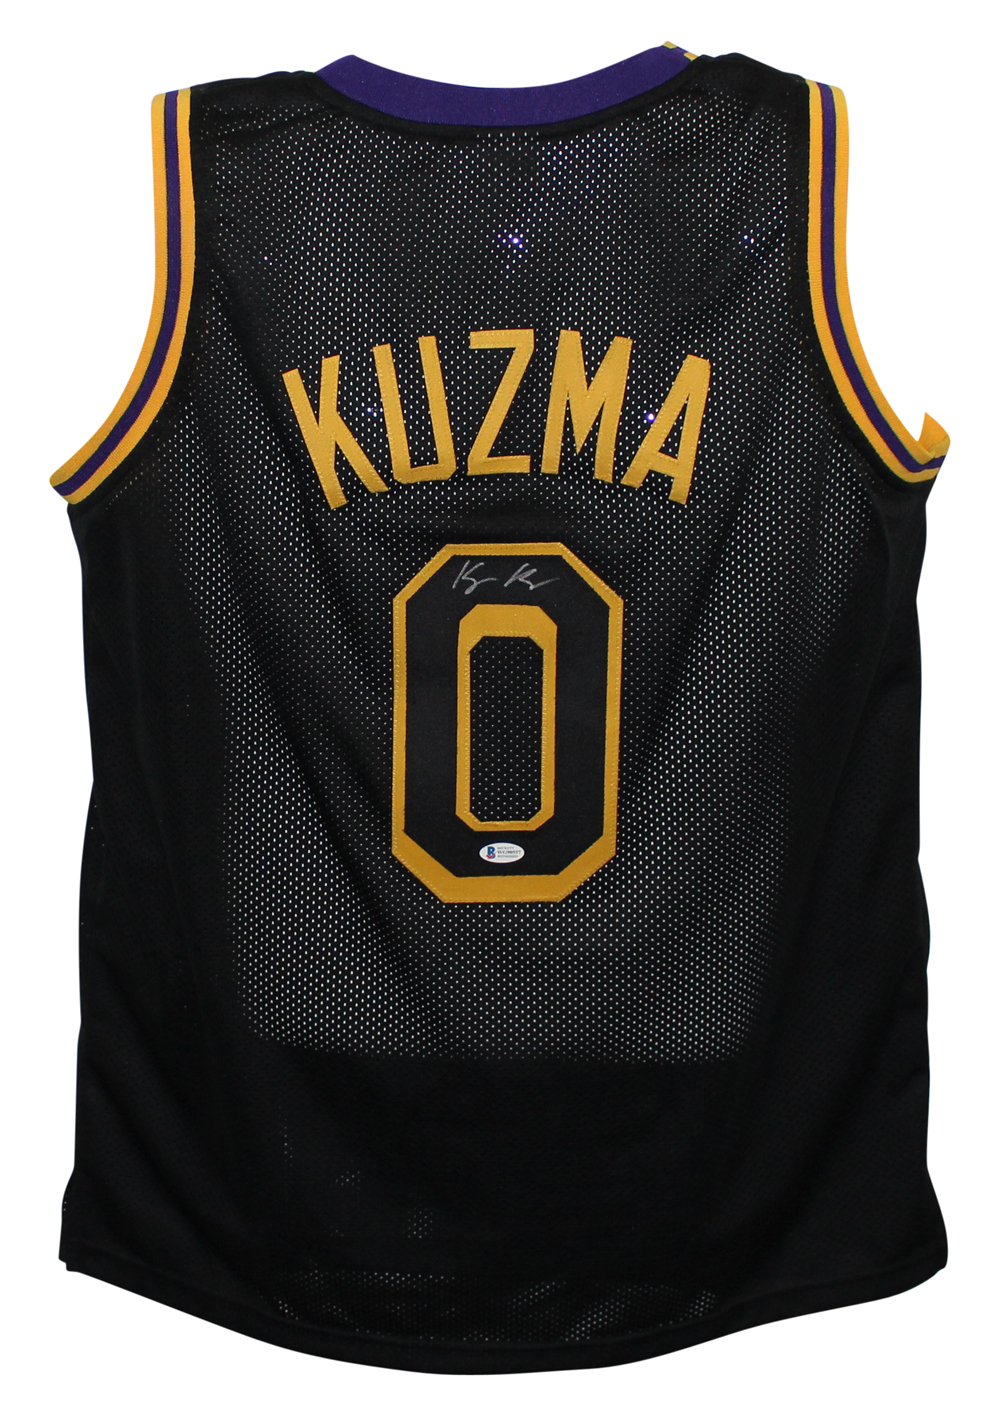 Kyle Kuzma Autographed/Signed Pro Style Black XL Jersey BAS 31095